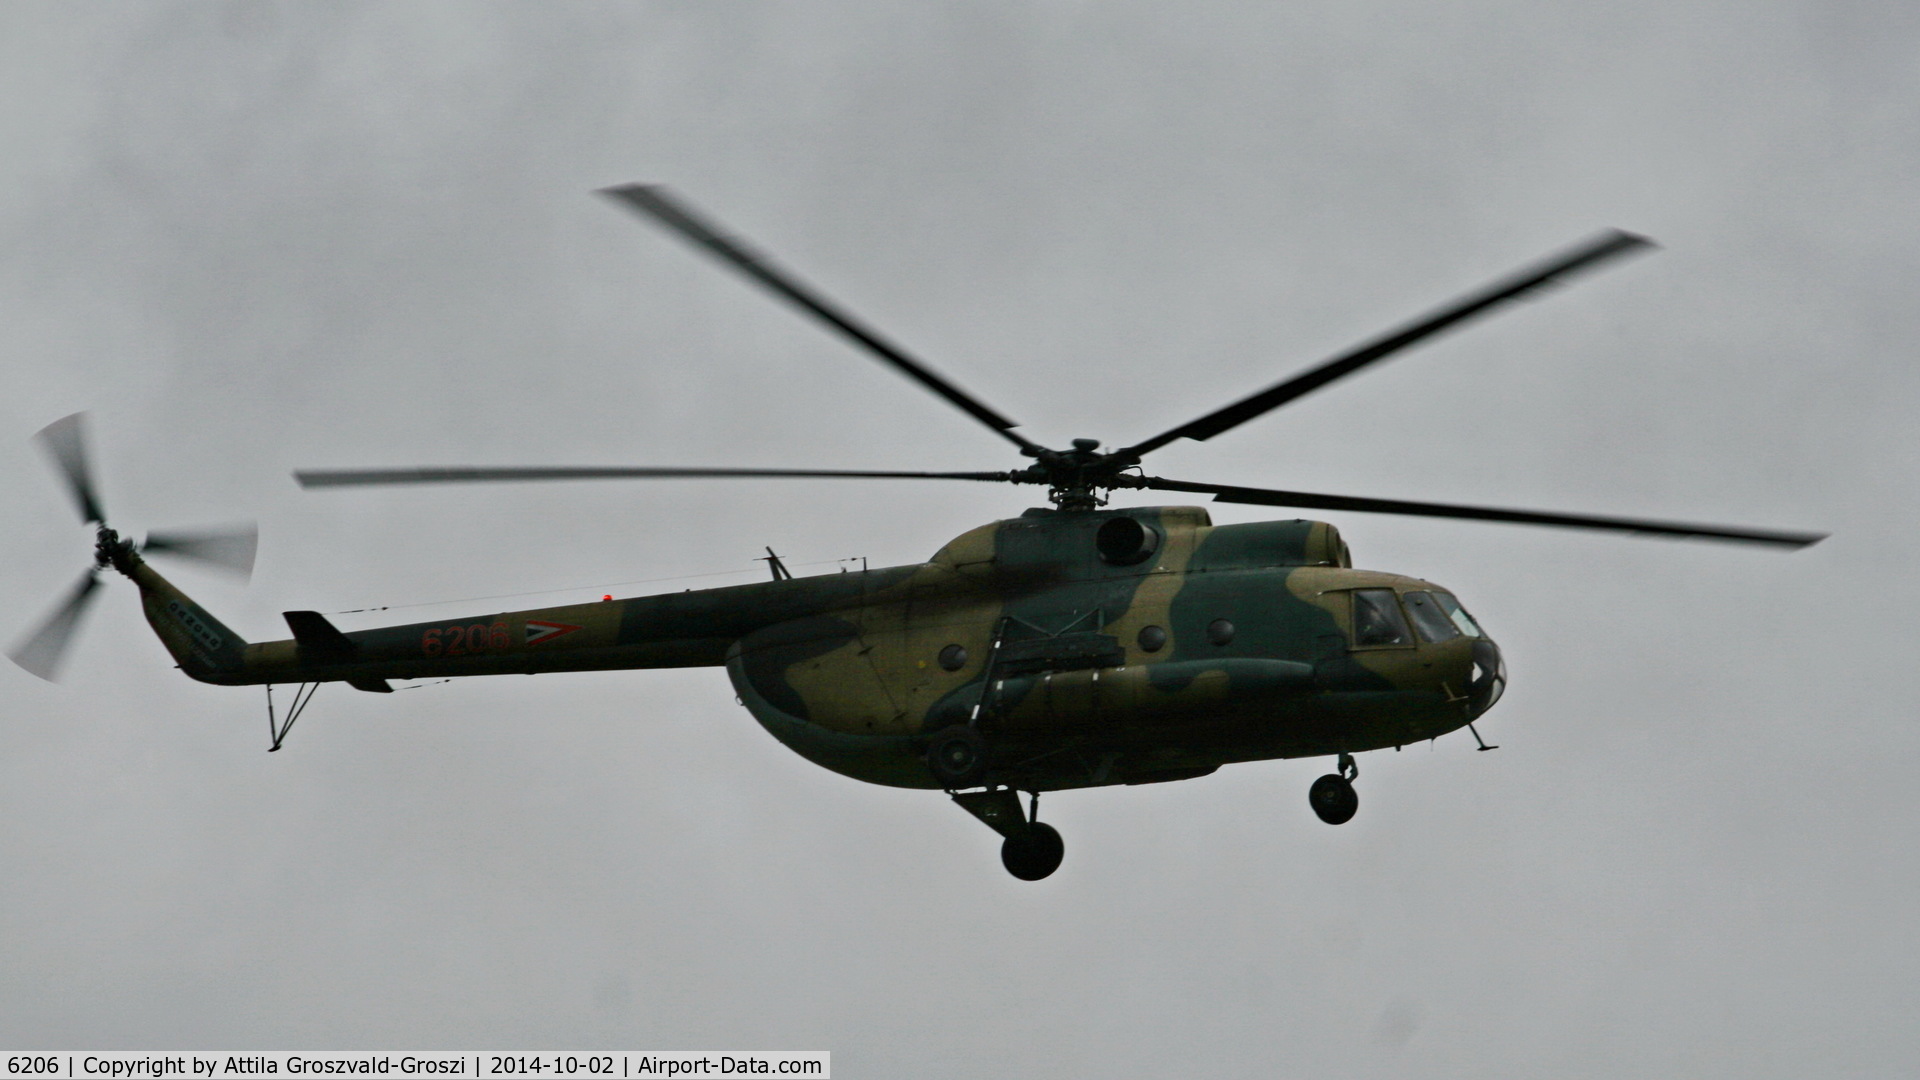 6206, 1979 Mil Mi-8T Hip C/N 226206, Veszprém-Jutas újmajor, Hungarian airforce training base